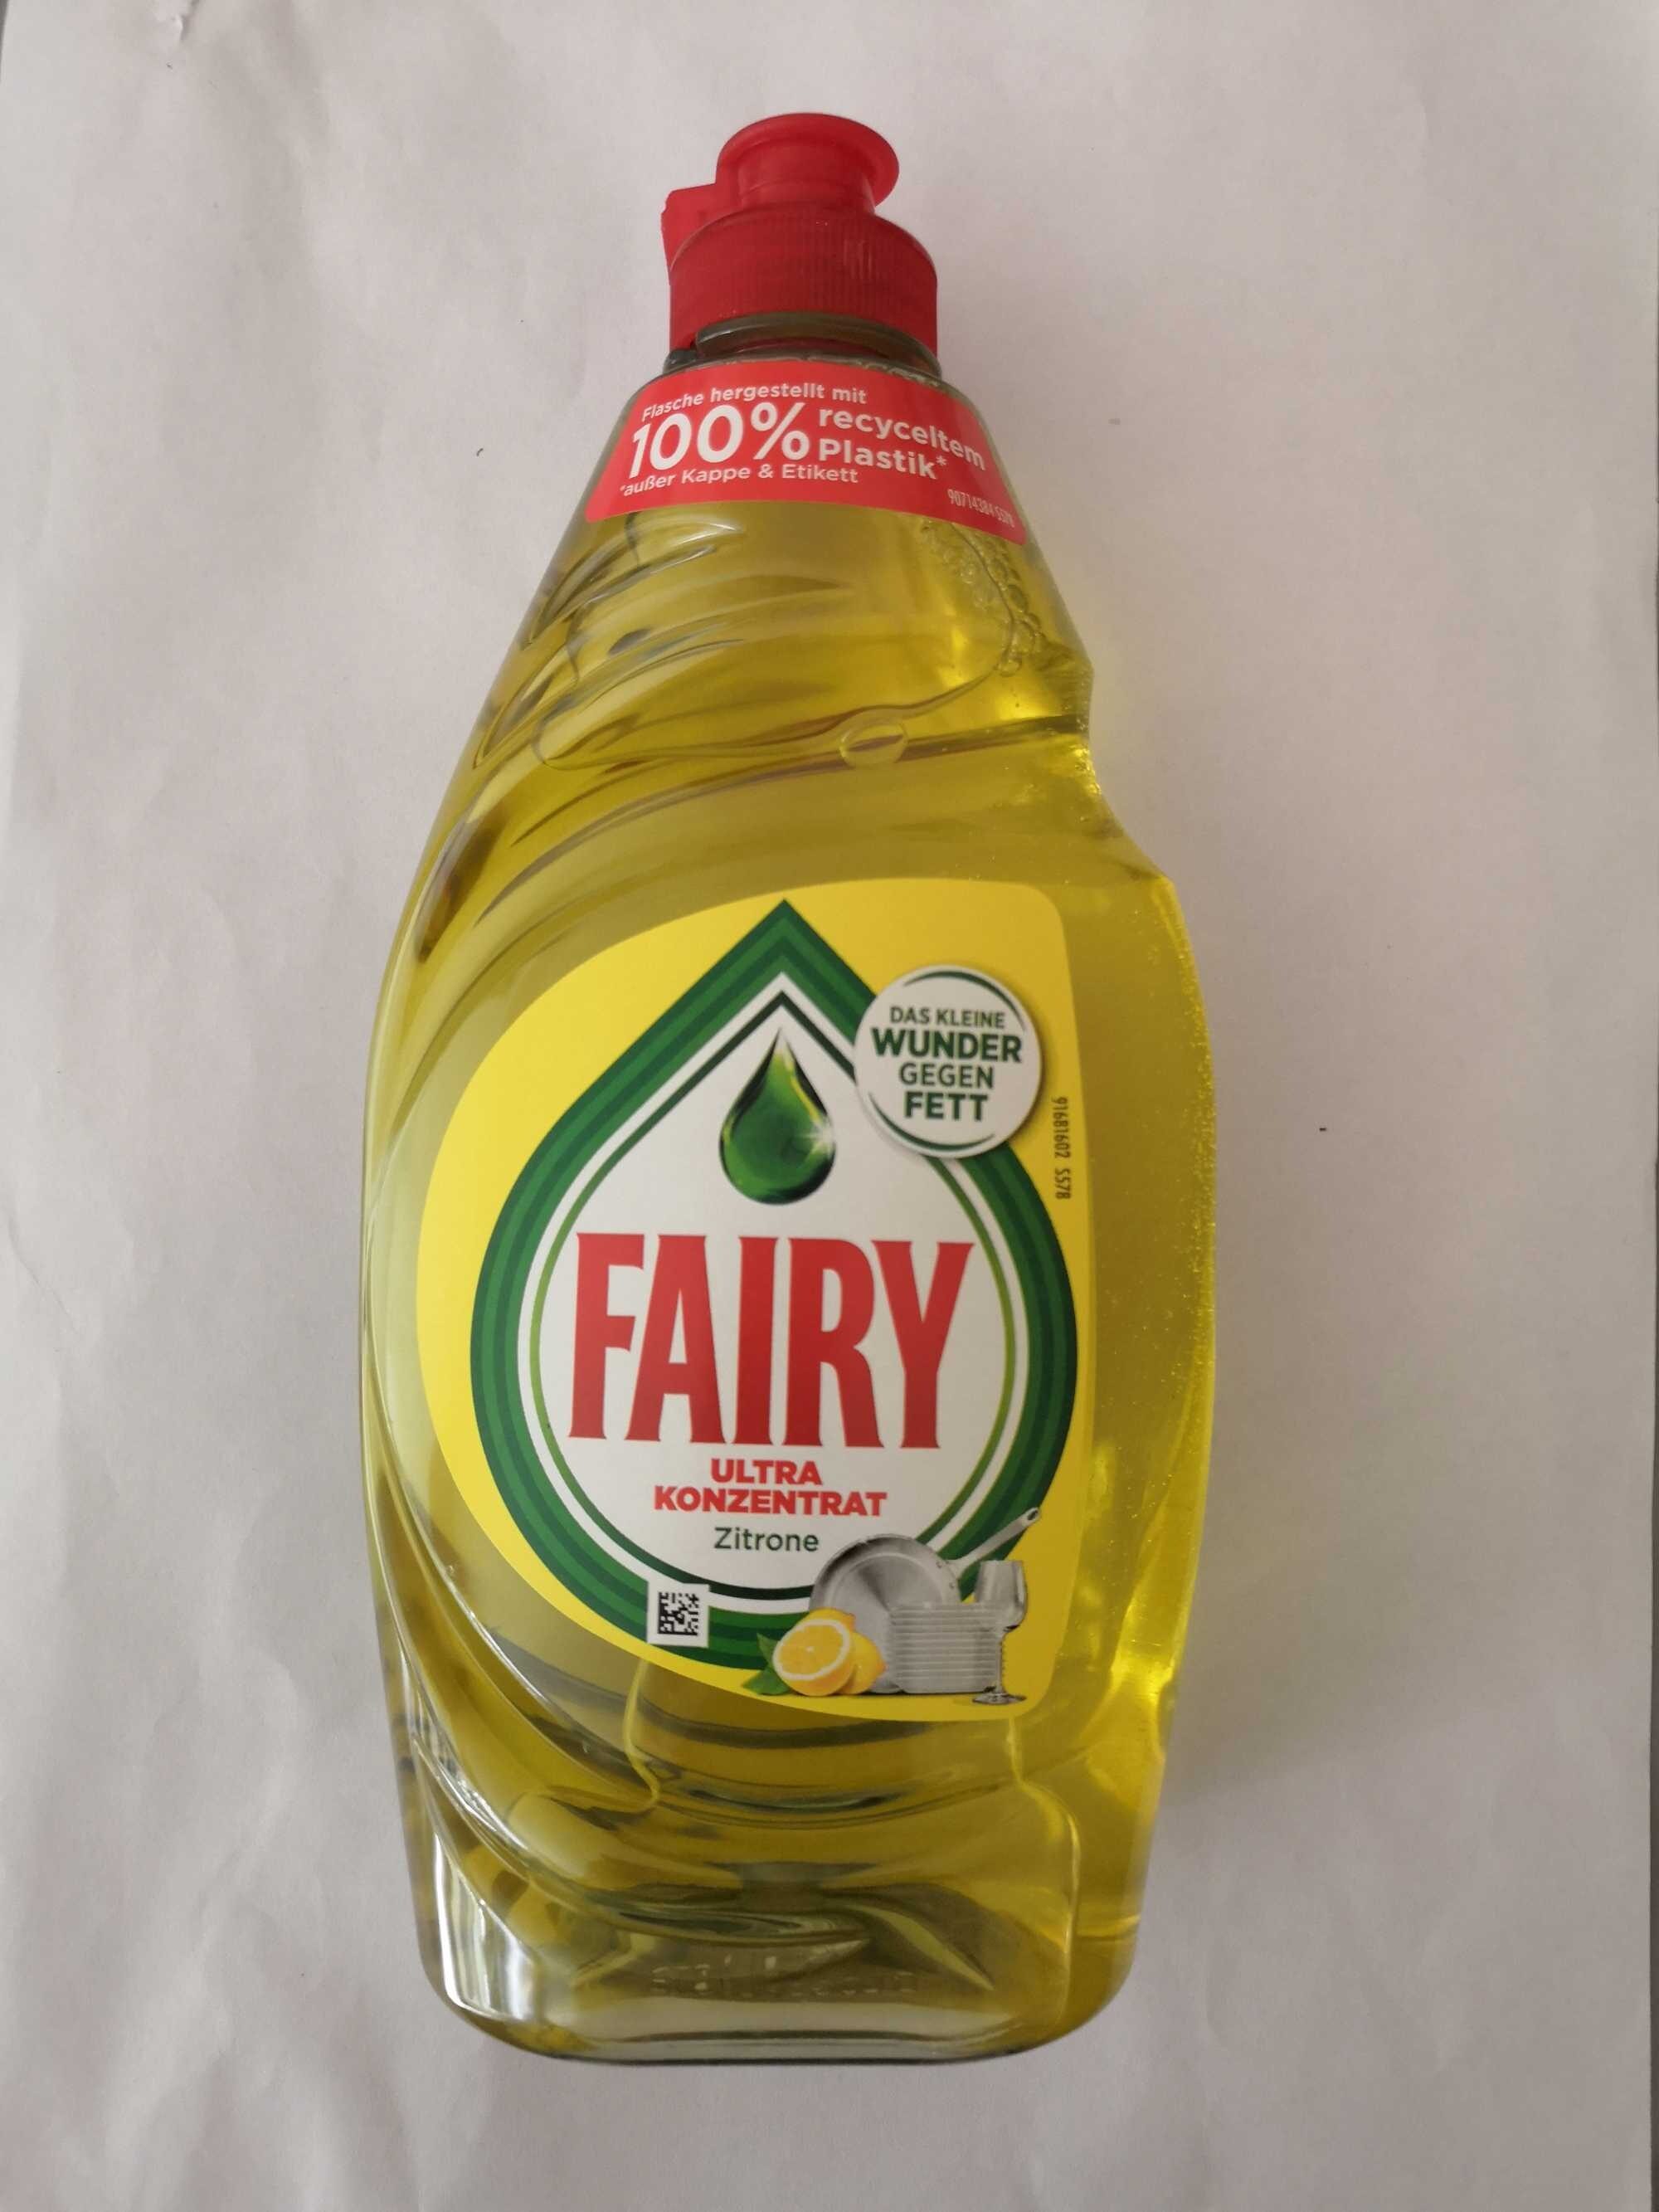 Fairy Ultra Konzentrat Zitrone - Produto - de